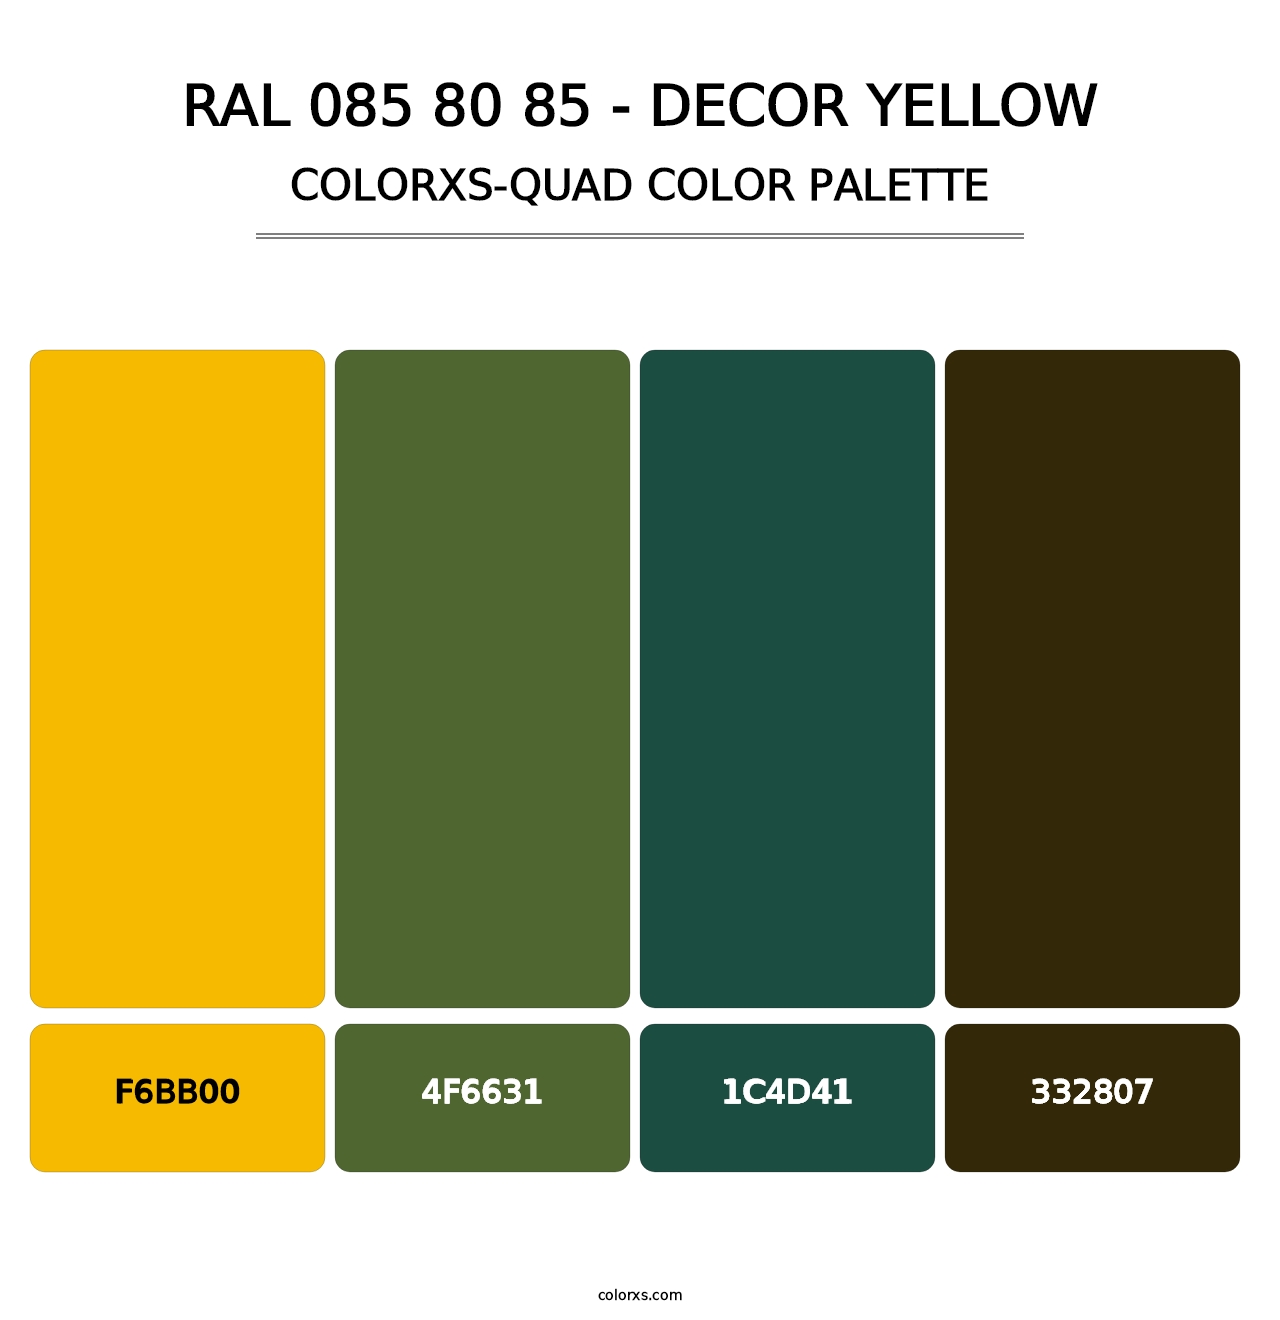 RAL 085 80 85 - Decor Yellow - Colorxs Quad Palette